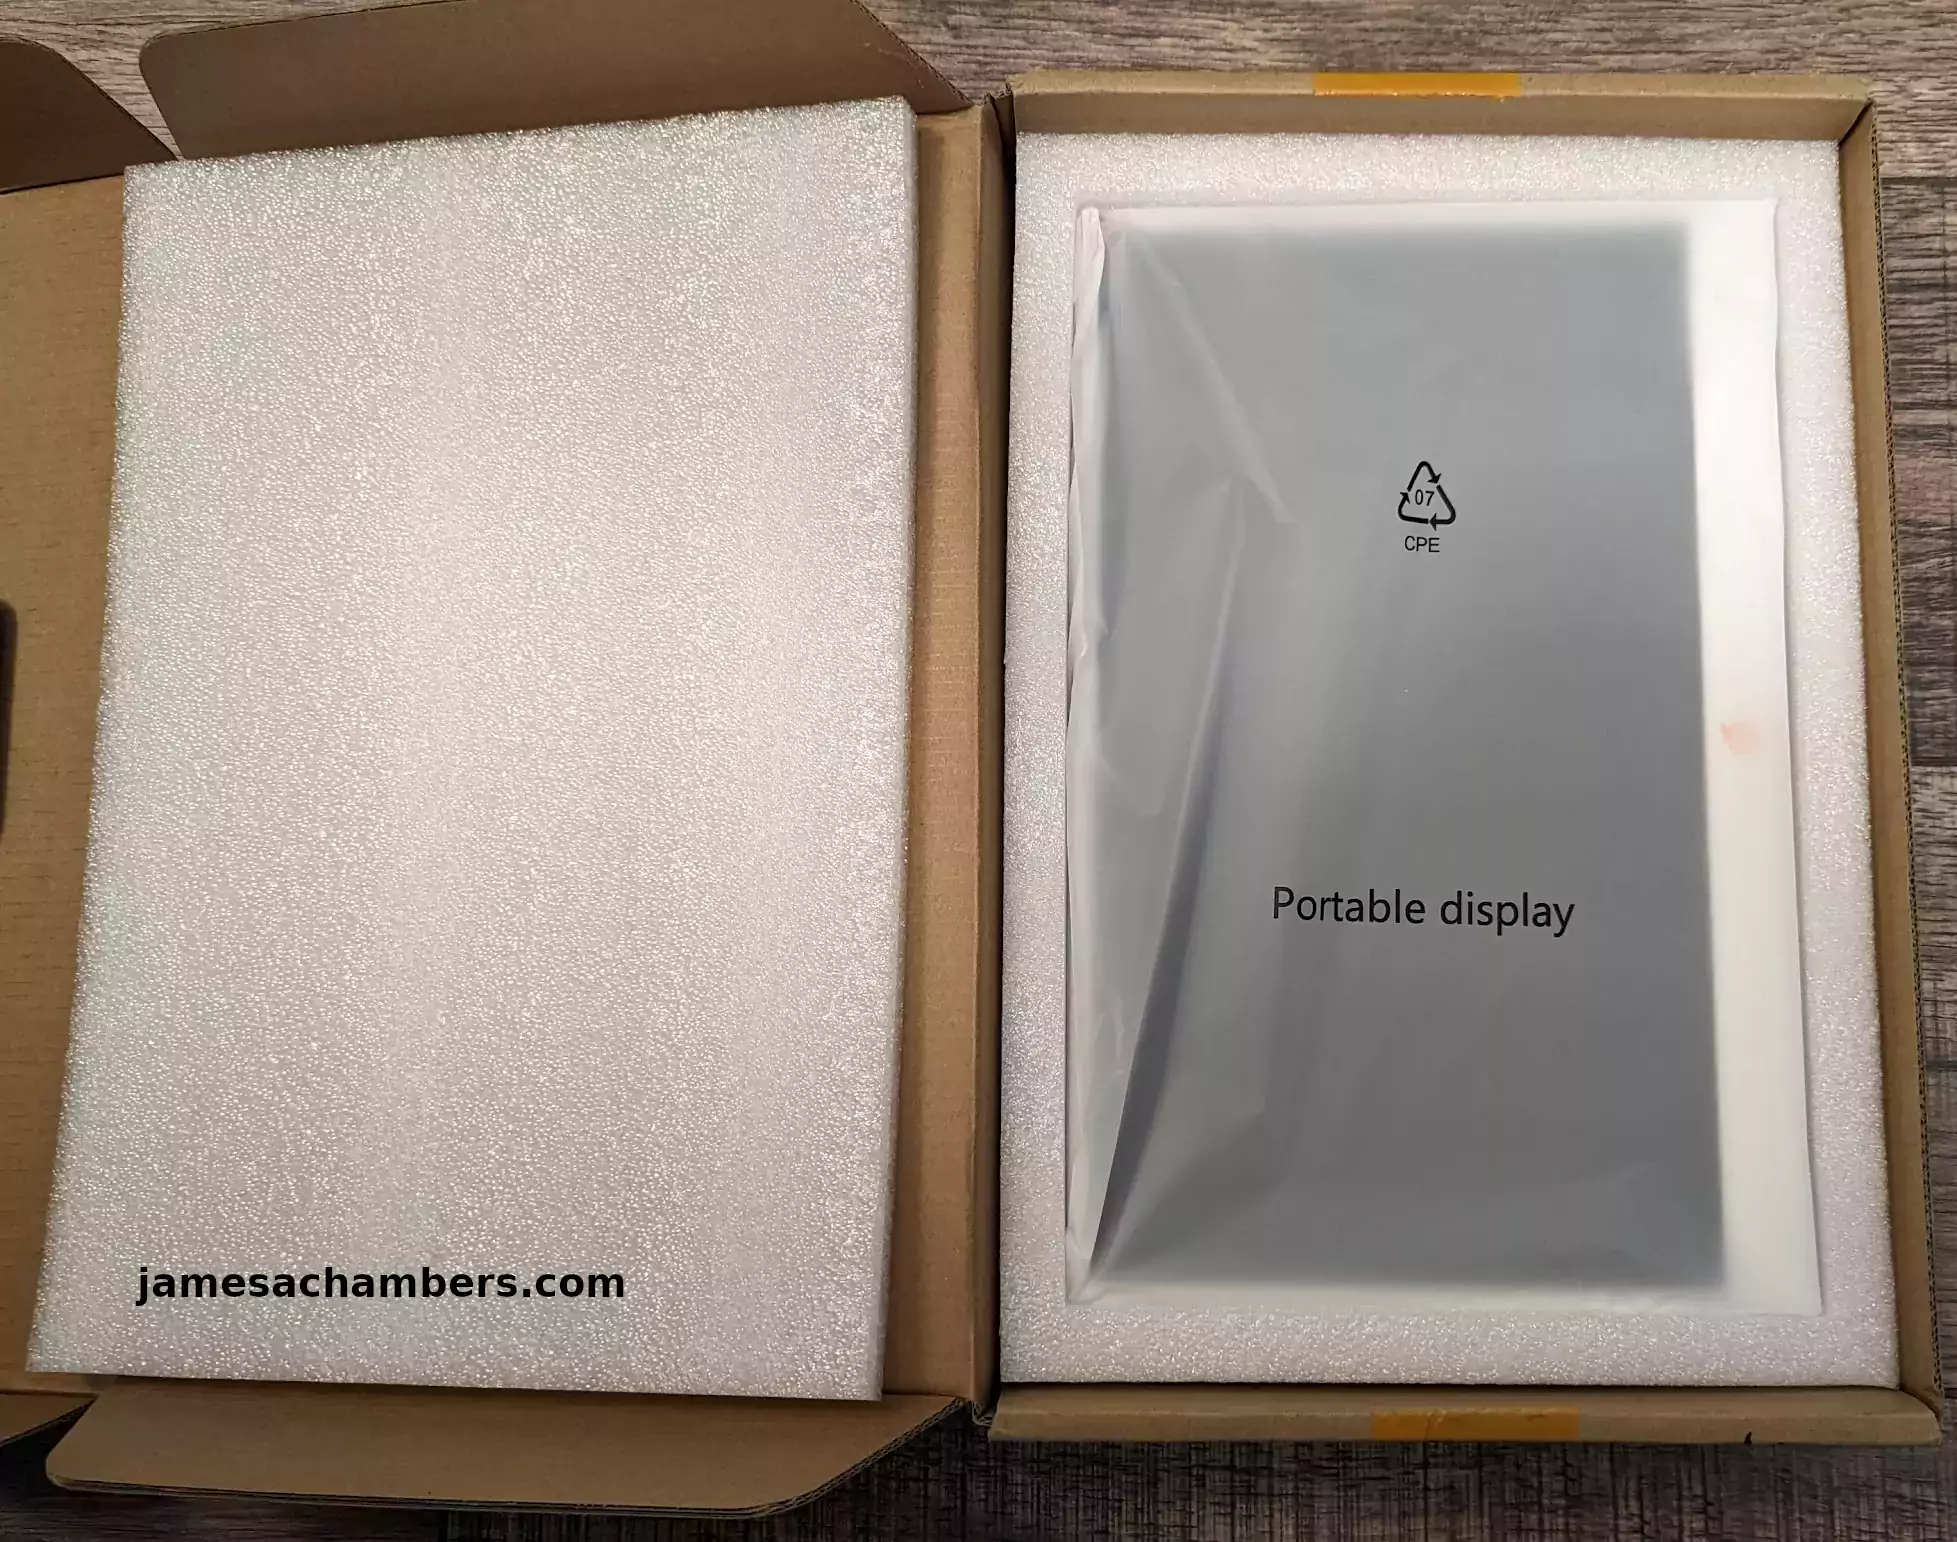 Orange Pi Portable Monitor - Packaging